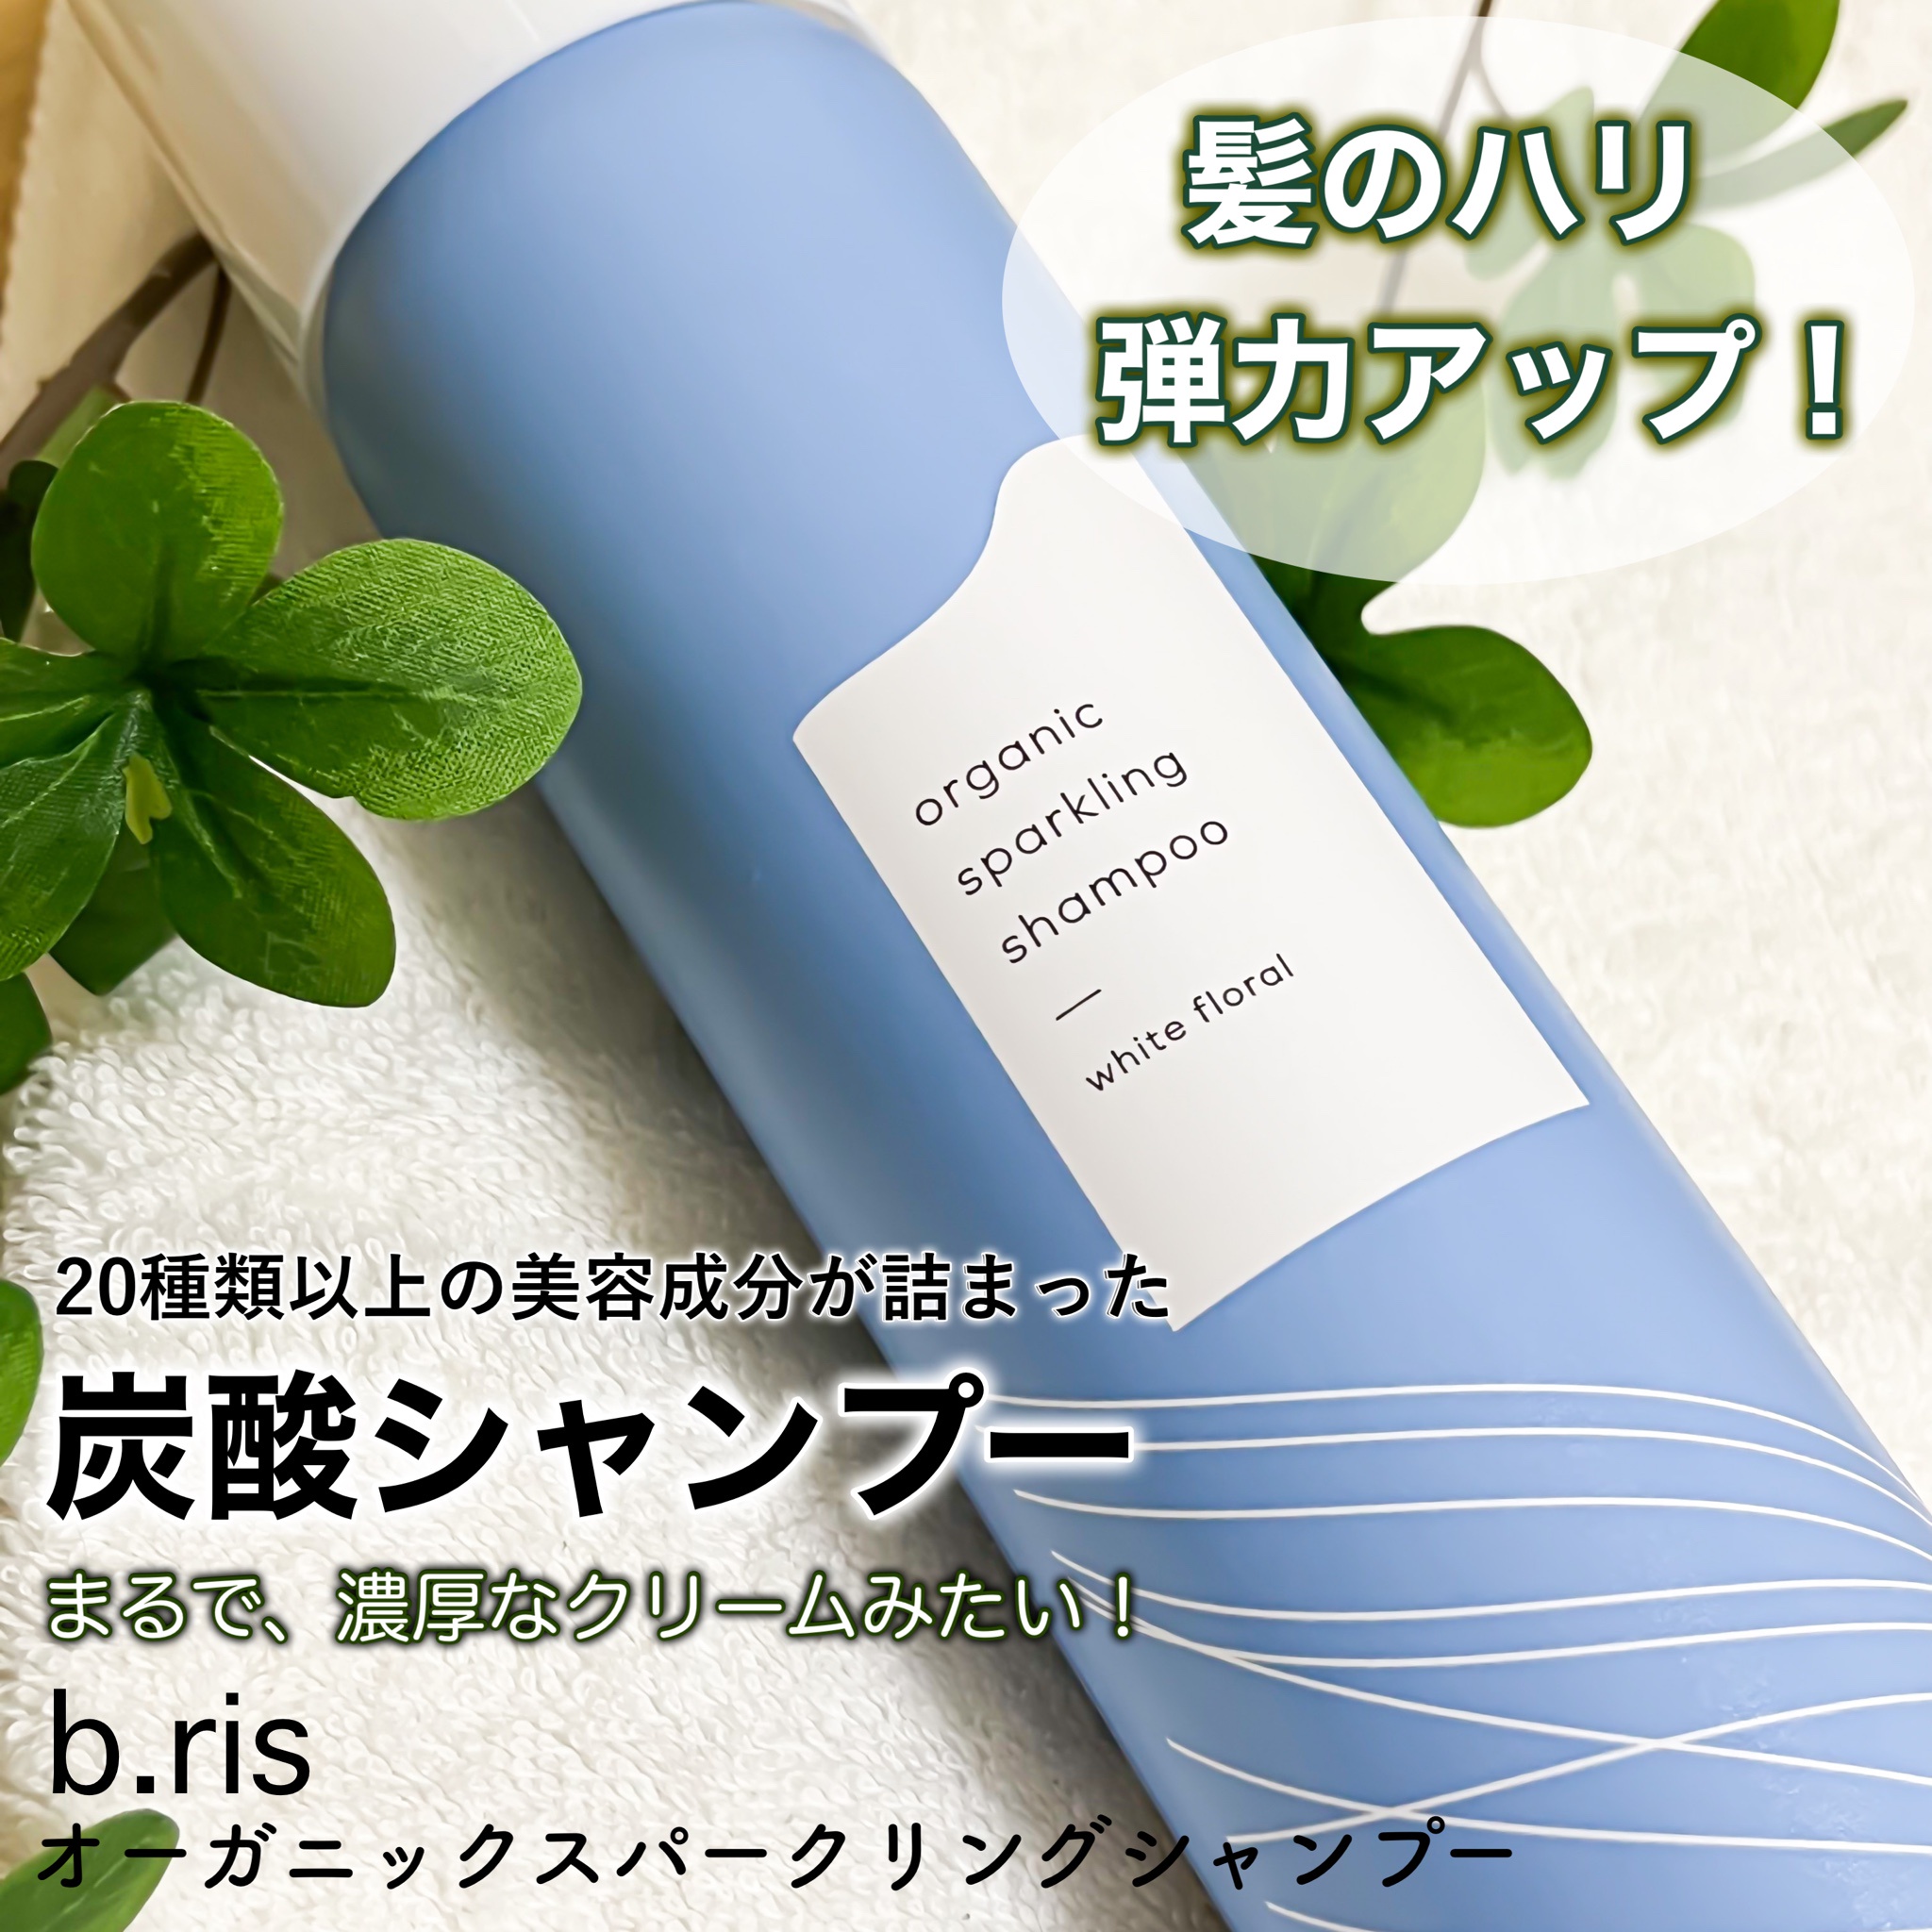 b.ris / organic sparkling shampooの公式商品情報｜美容・化粧品情報 